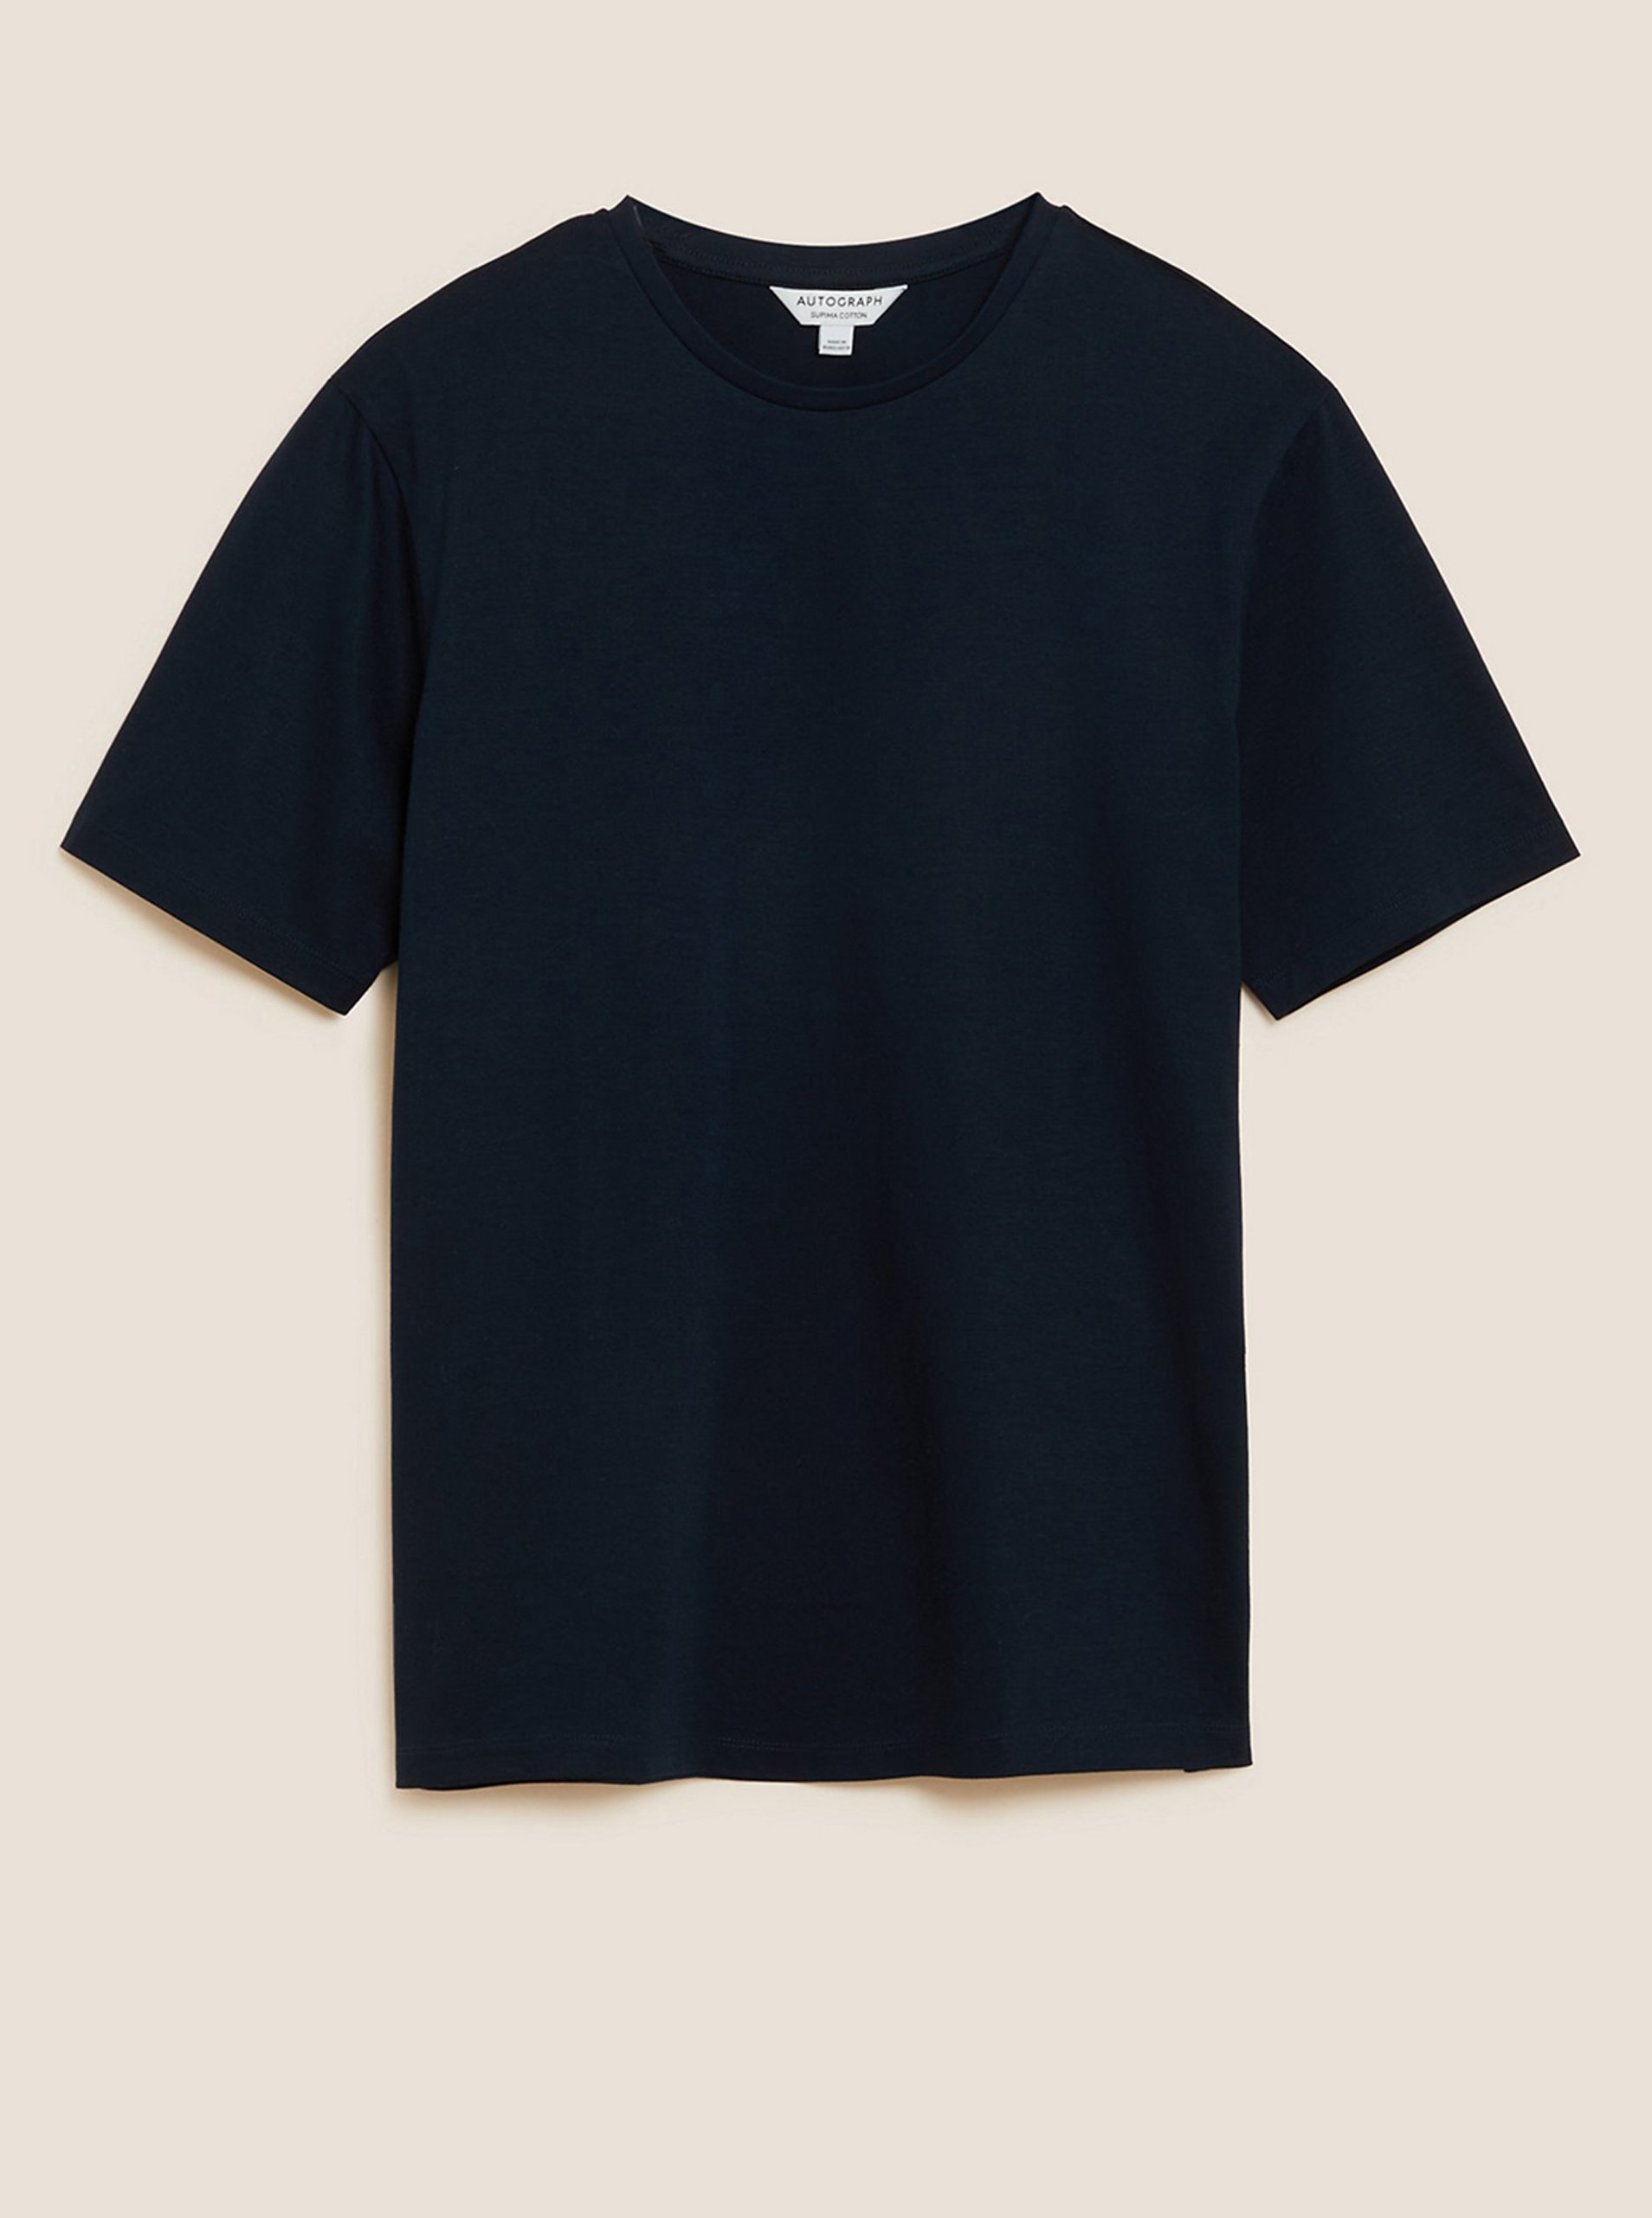 E-shop Tričko z prémiové bavlny, úzký střih Marks & Spencer námořnická modrá